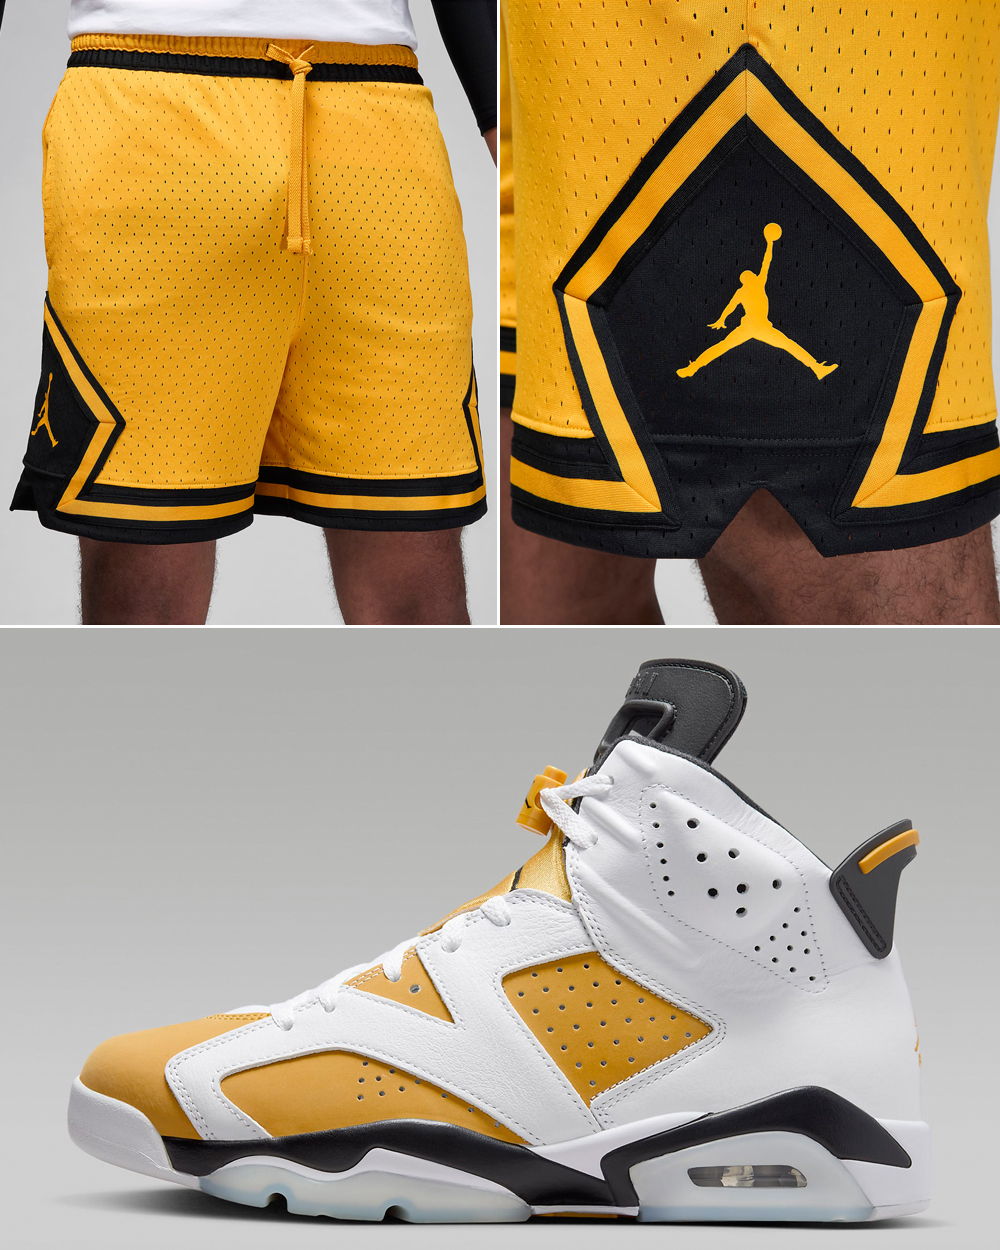 Air-Jordan-6-Yellow-Ochre-Mesh-Shorts-Outfit